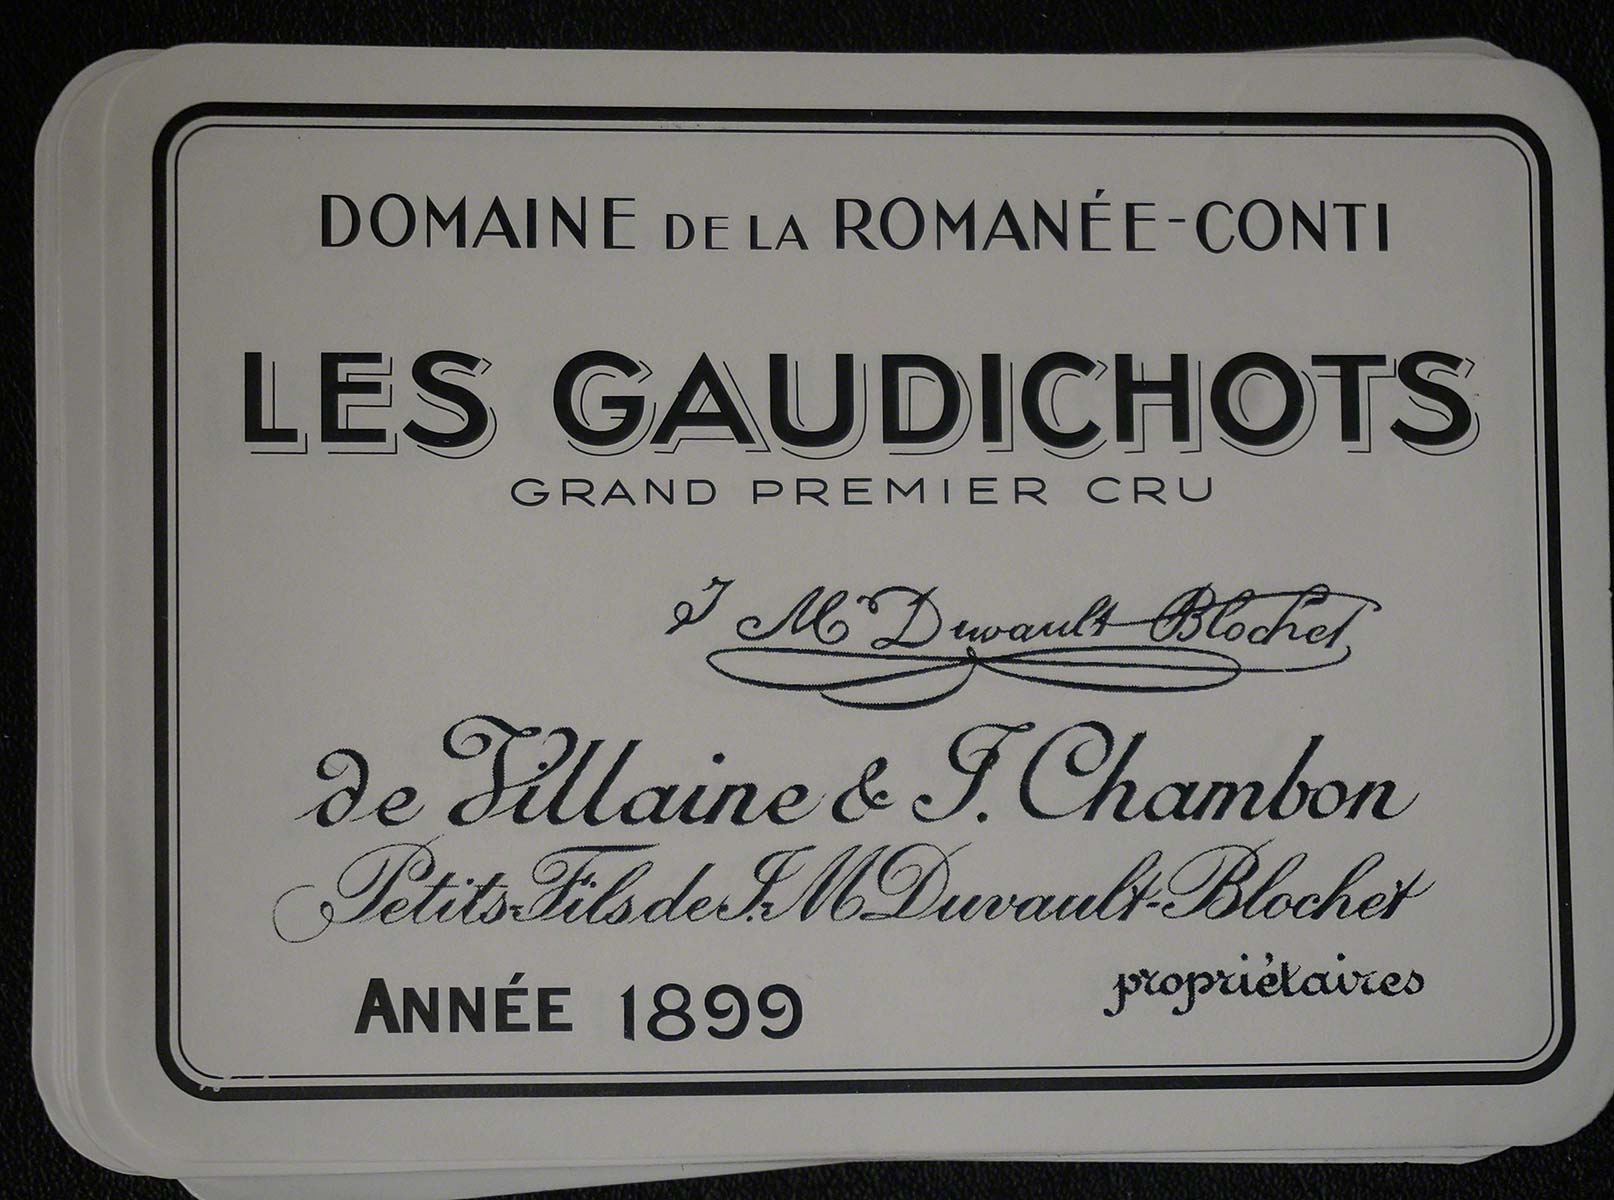 Gaudichots-1899